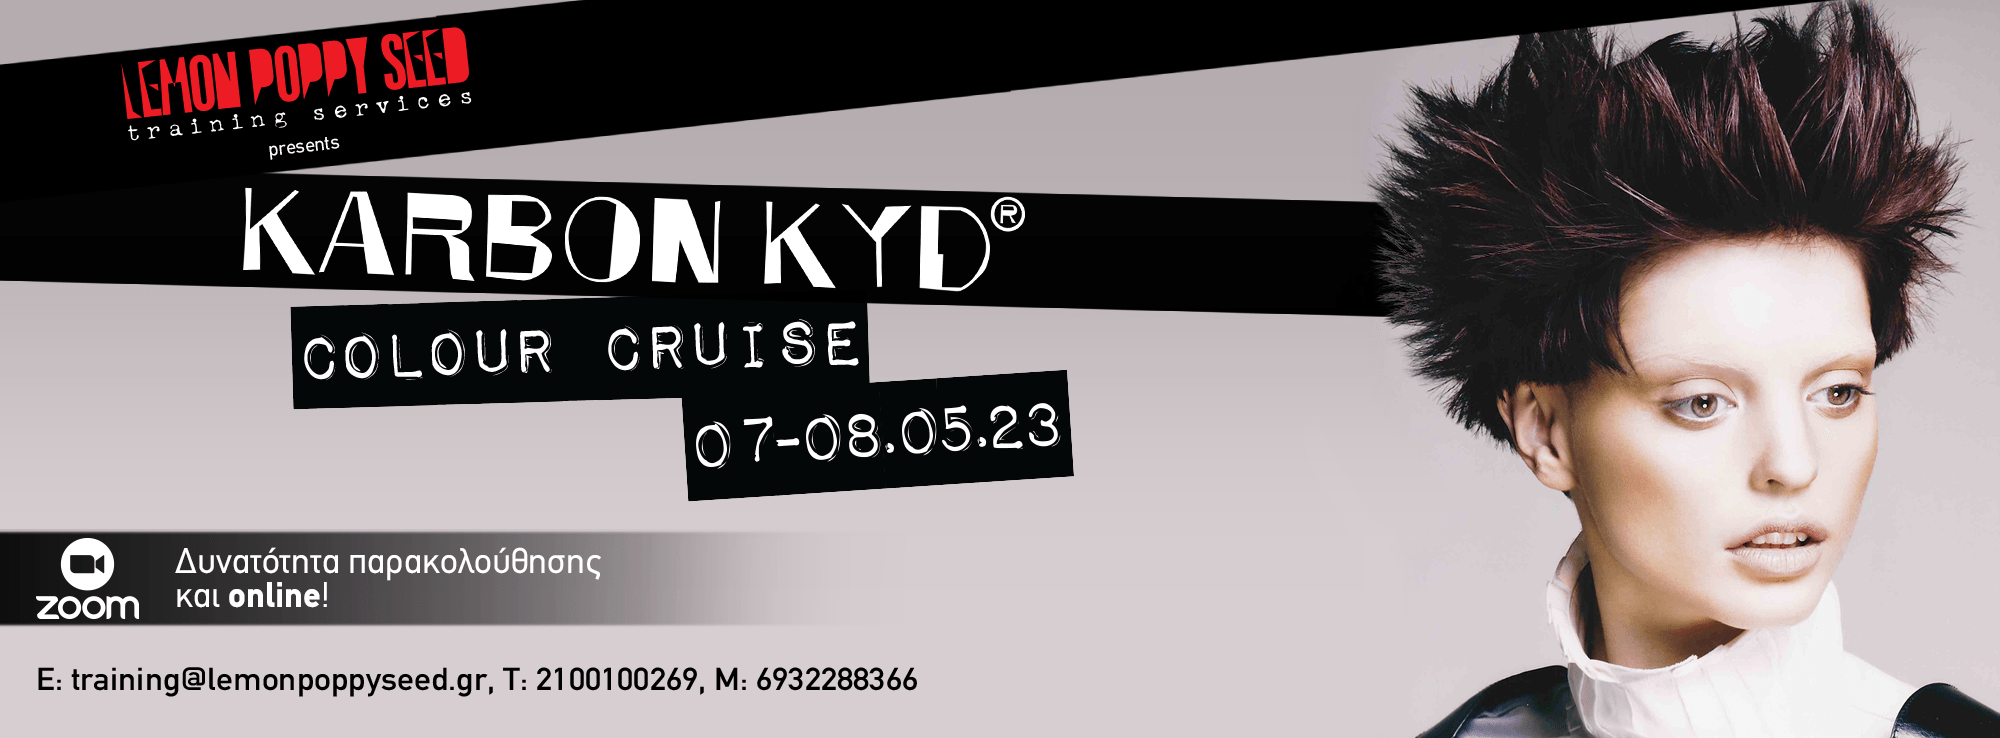 JAYSON GRAY- KARBON KYD Colour Cruise Seminar